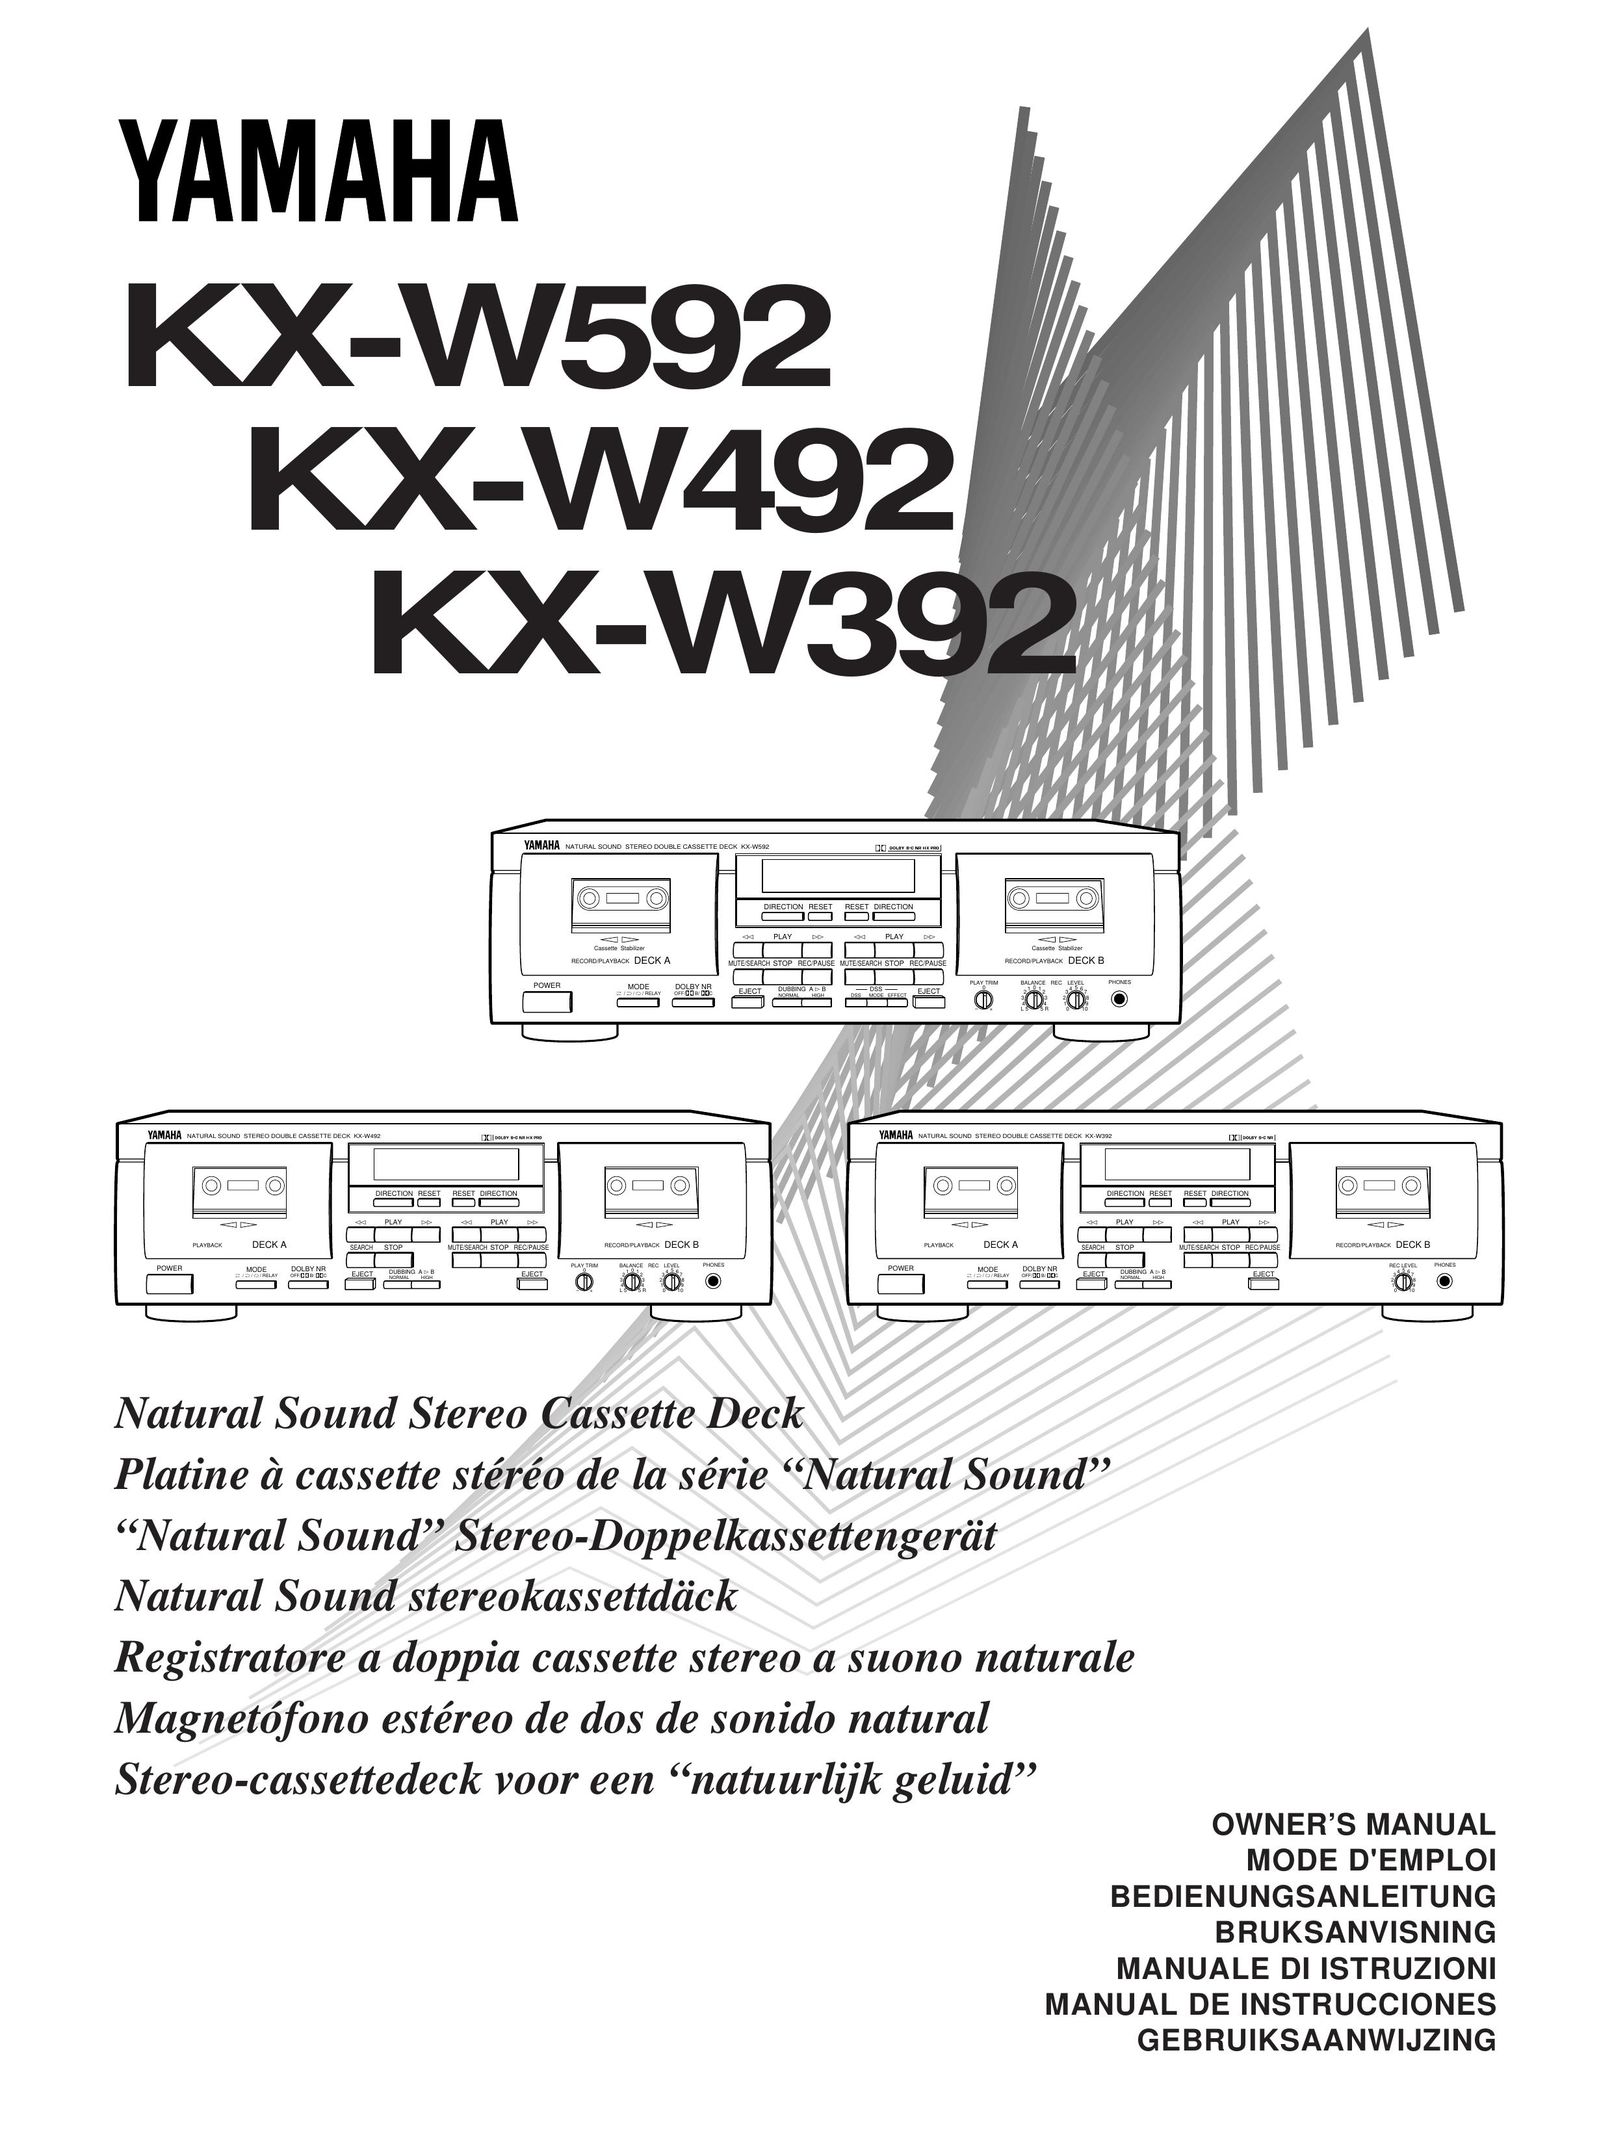 Yamaha KX-W392 Cassette Player User Manual